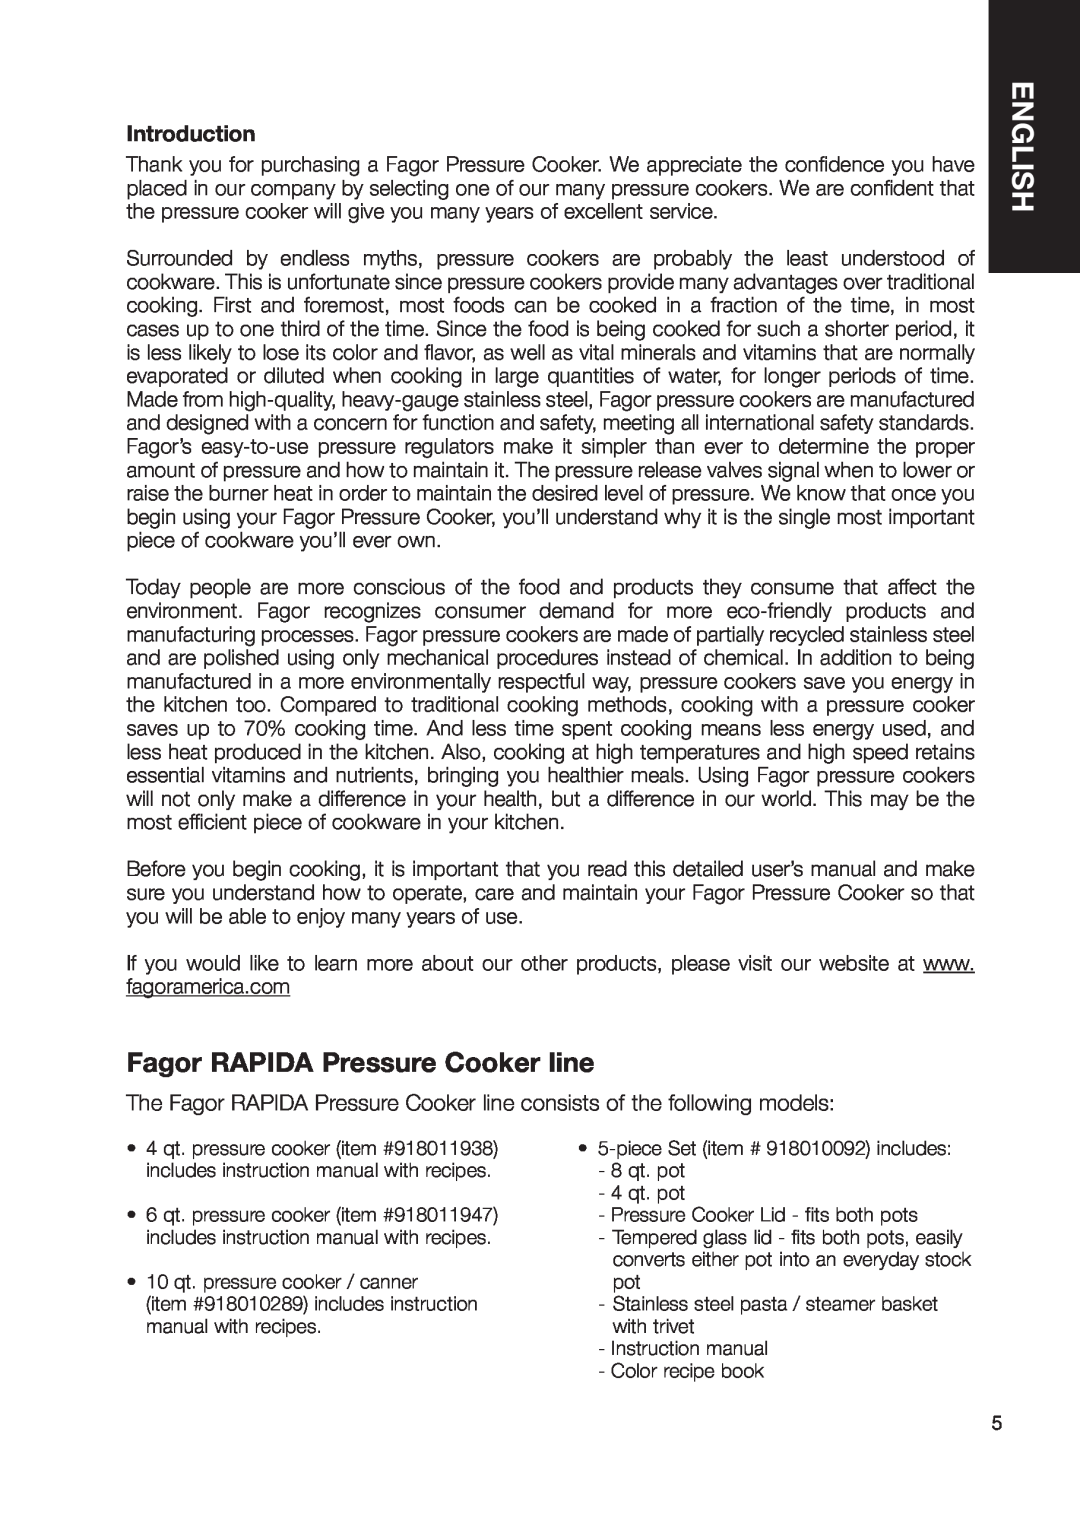 Fagor America Fagor Rapida Pressure Cooker user manual Fagor RAPIDA Pressure Cooker line, English, Introduction 